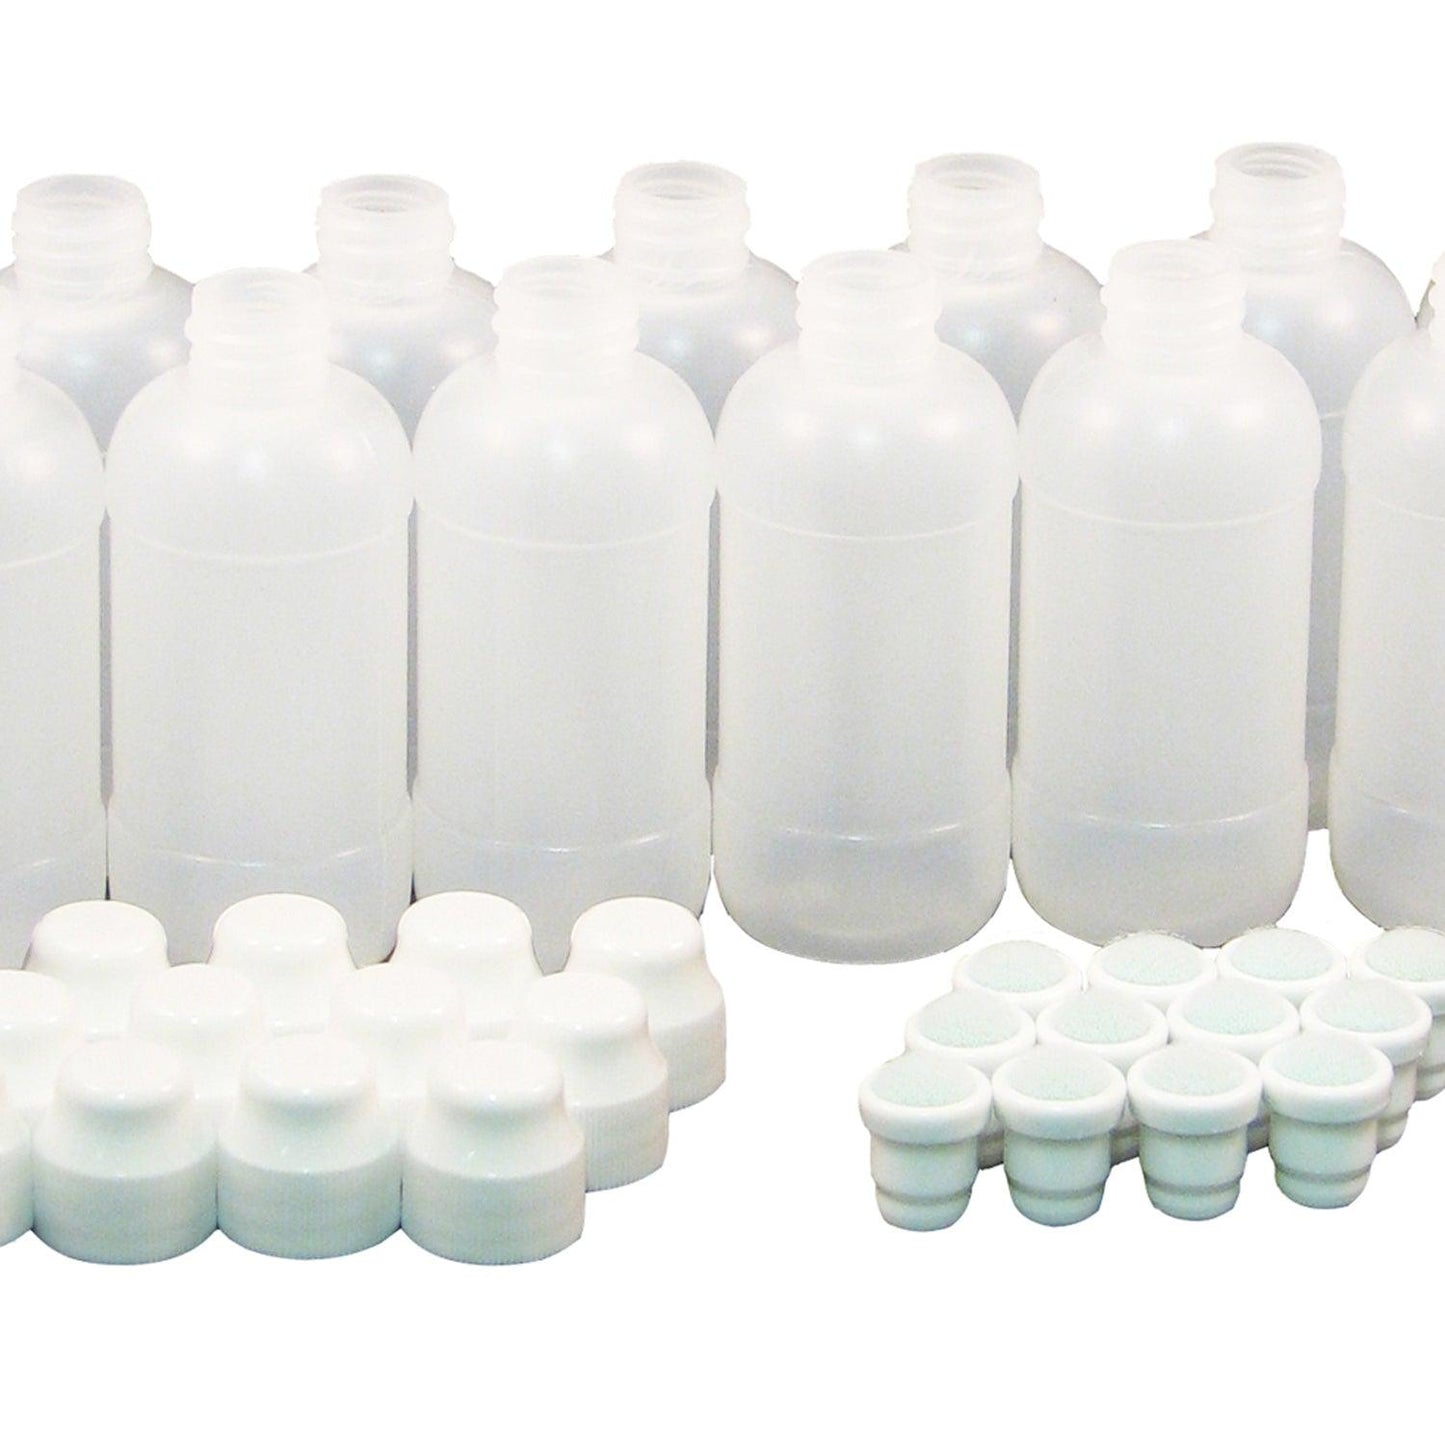 Marker Bottles 2oz/59ml, Dauber Tips & Caps, Bag of 12 - Loomini